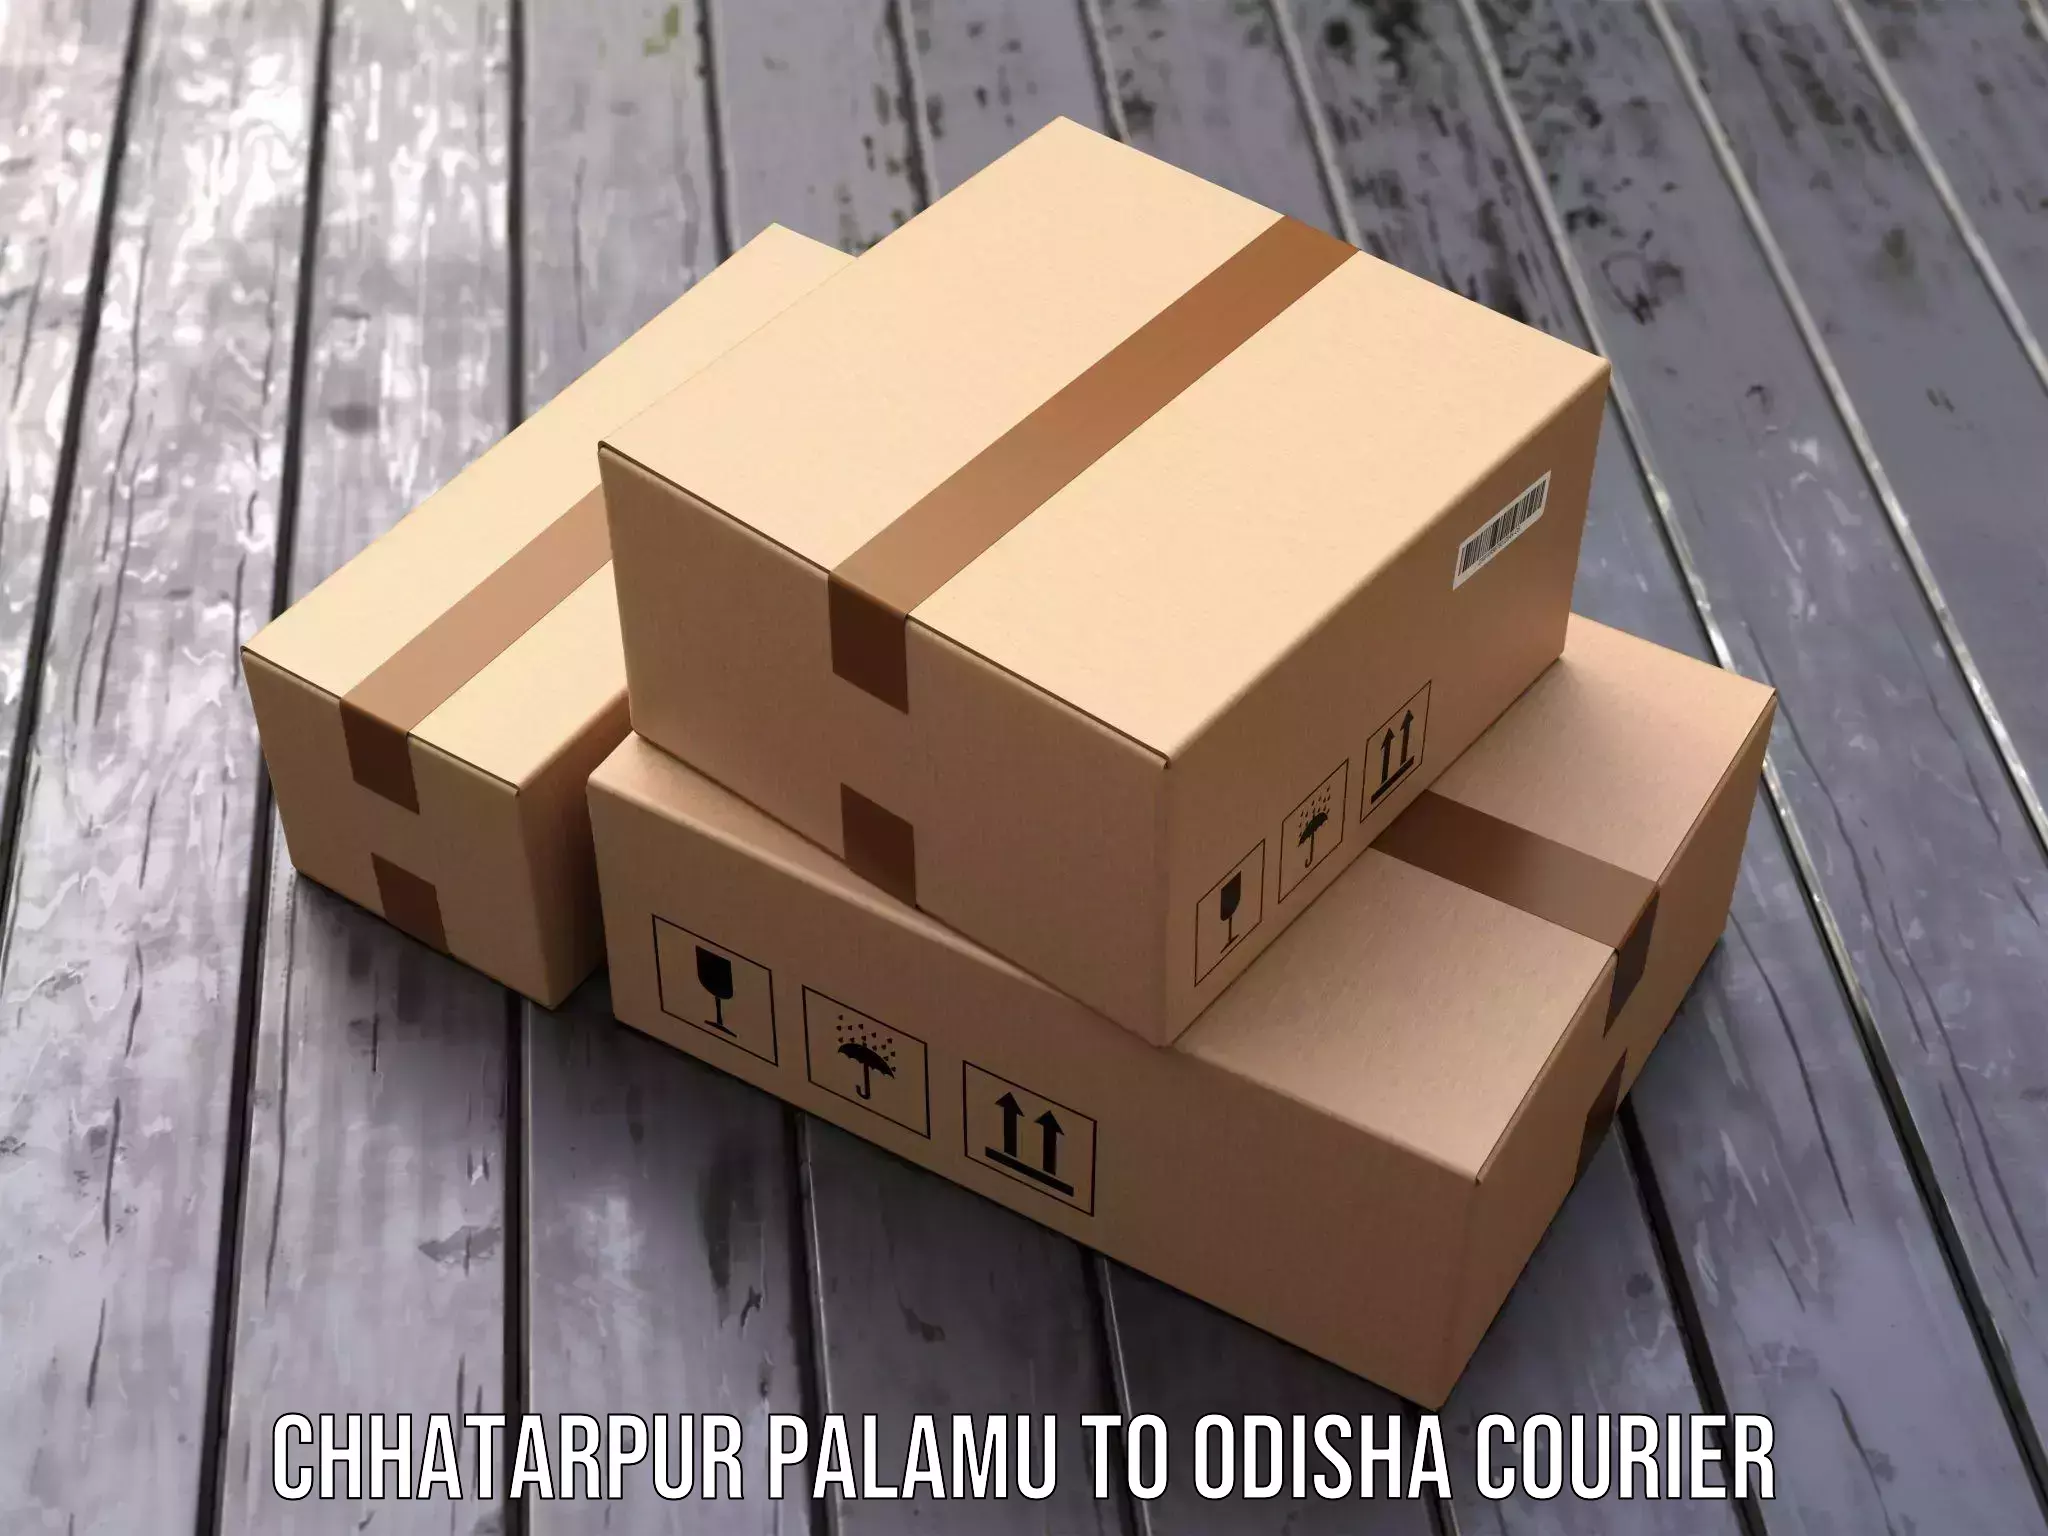 International parcel service Chhatarpur Palamu to Joda